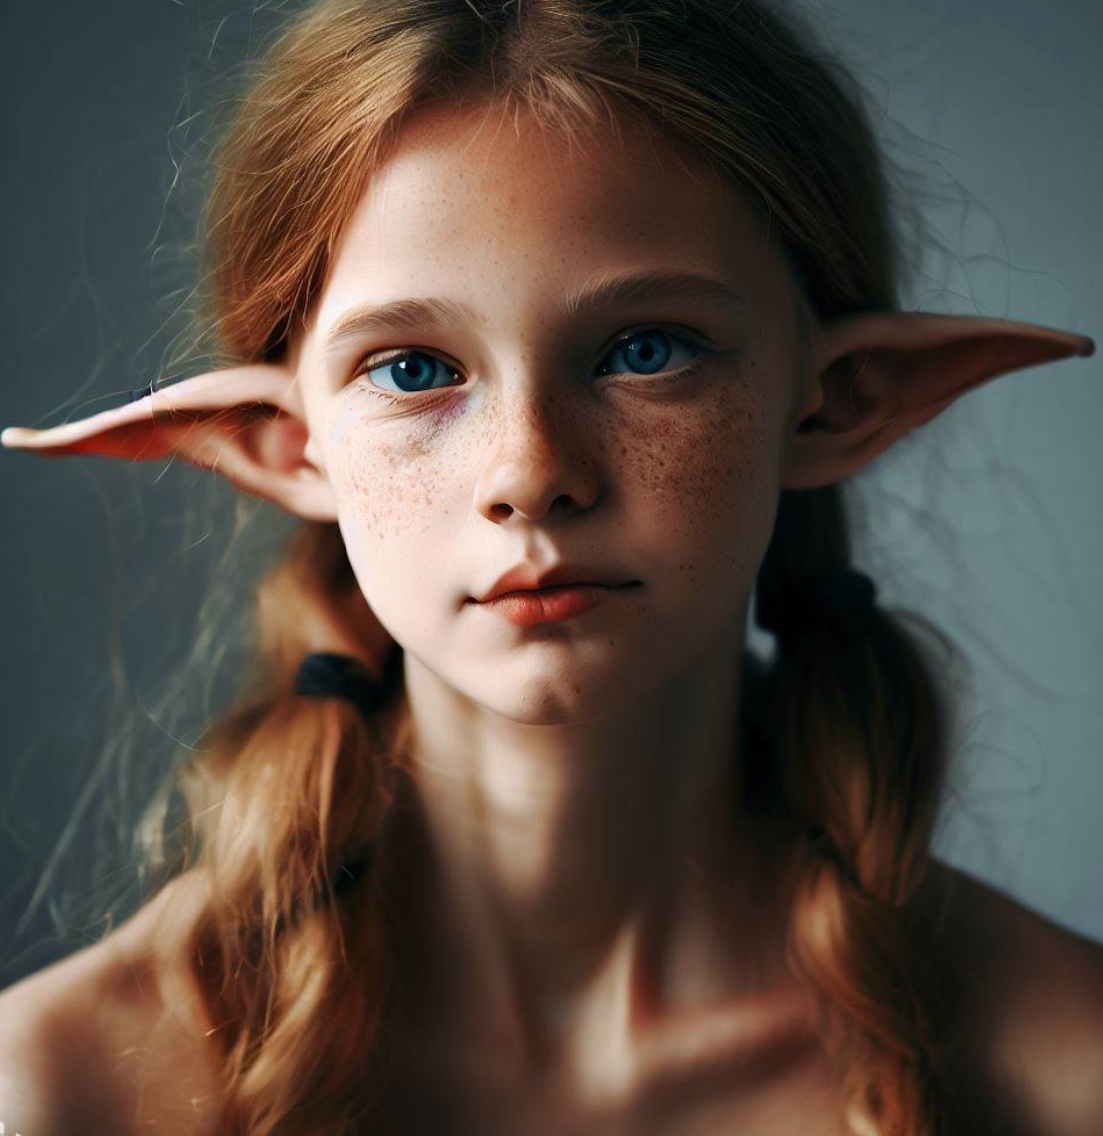 Das elfische Beryn Fin (Pubertät)